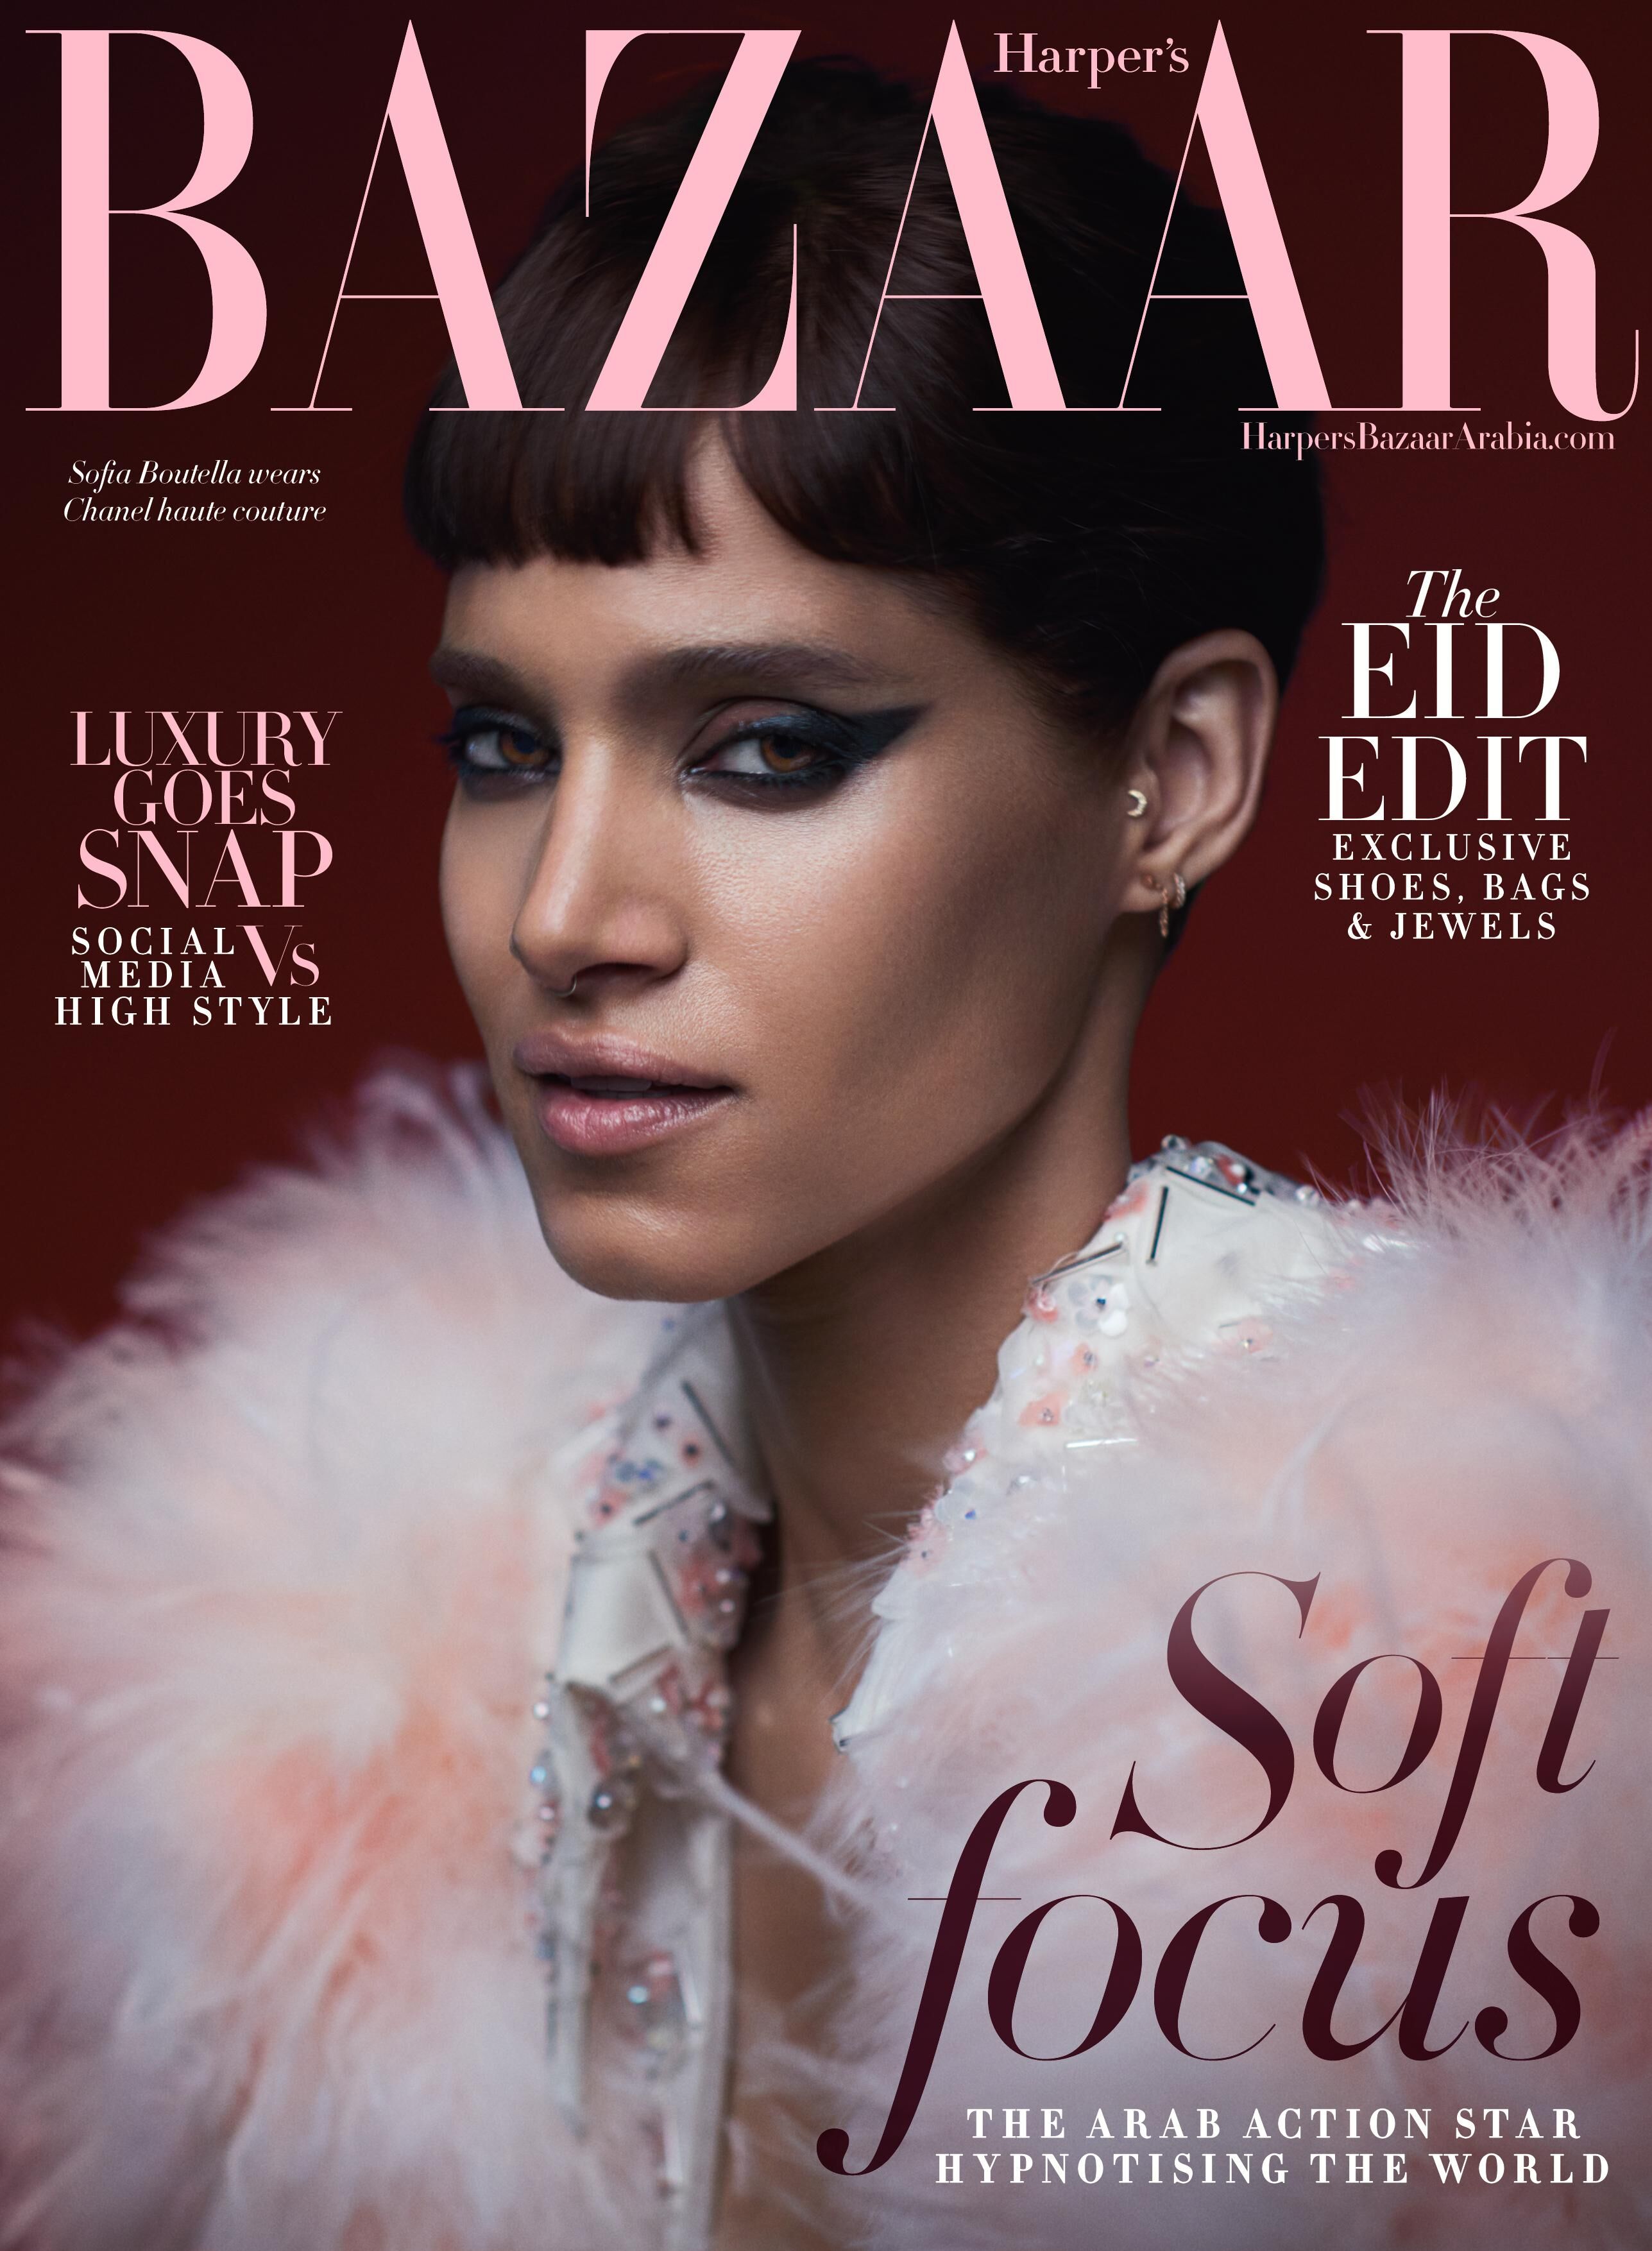 Meet Sofia Boutella: Bazaar's June Cover Star | Harper's Bazaar Arabia